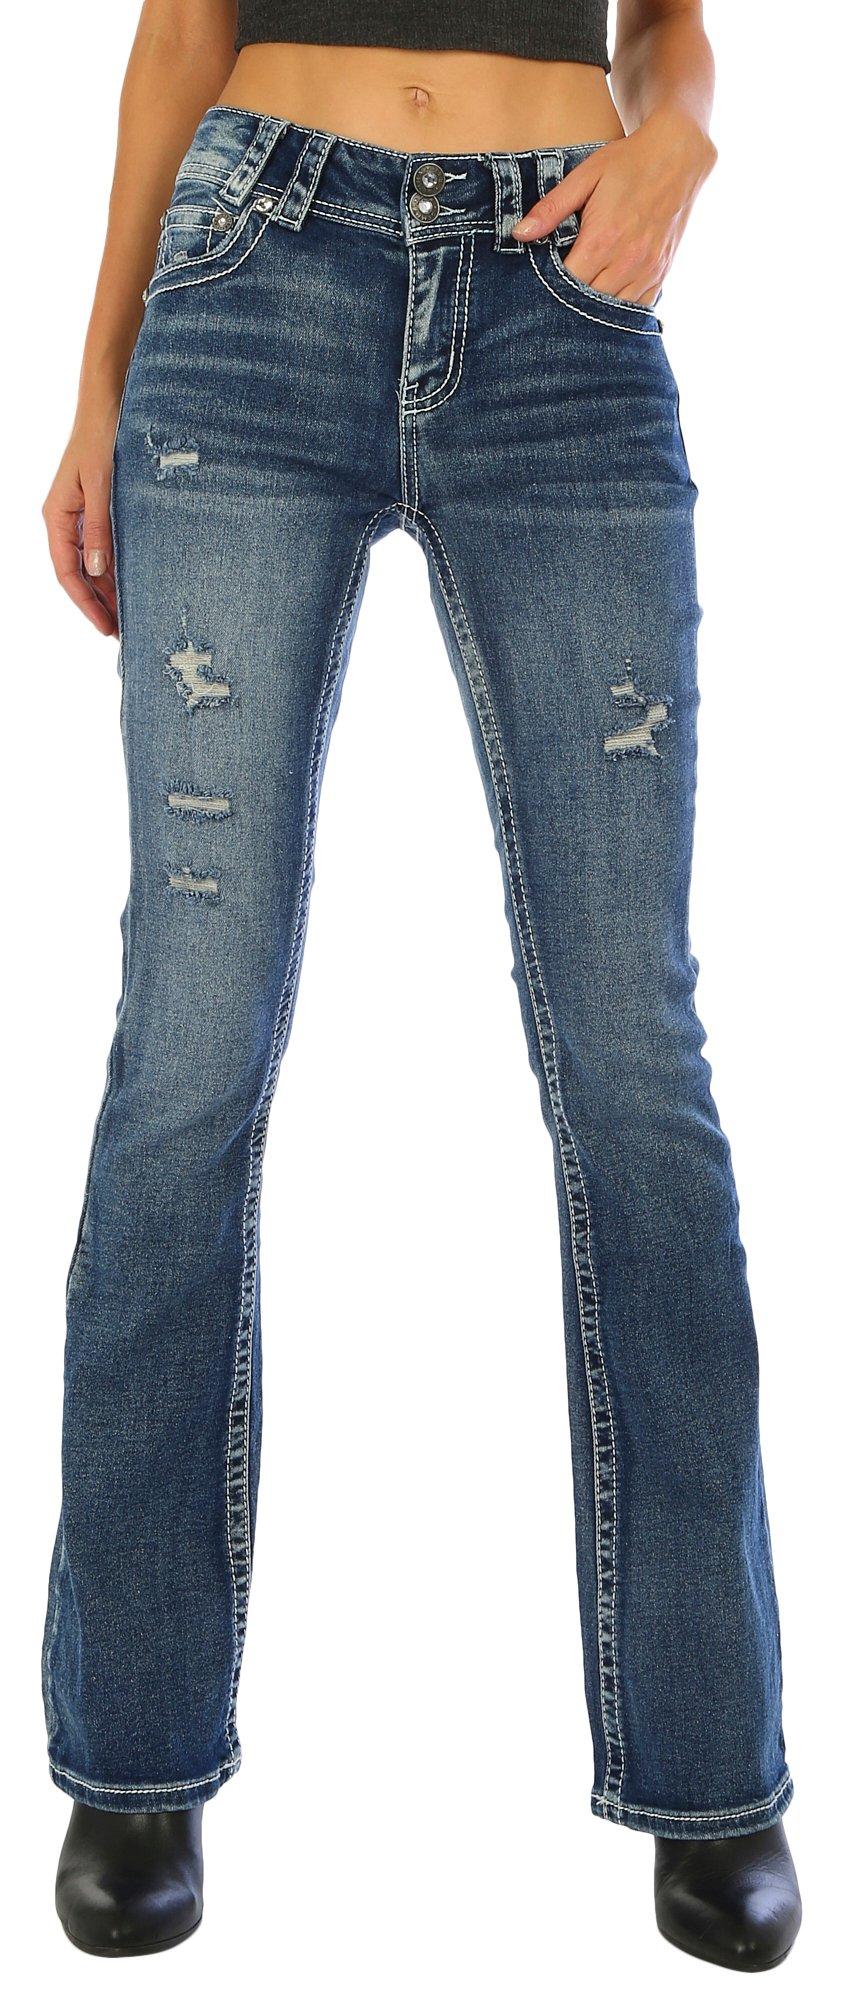 Gemma Rae Juniors Deconstructed Juniors Bling Flare Jeans